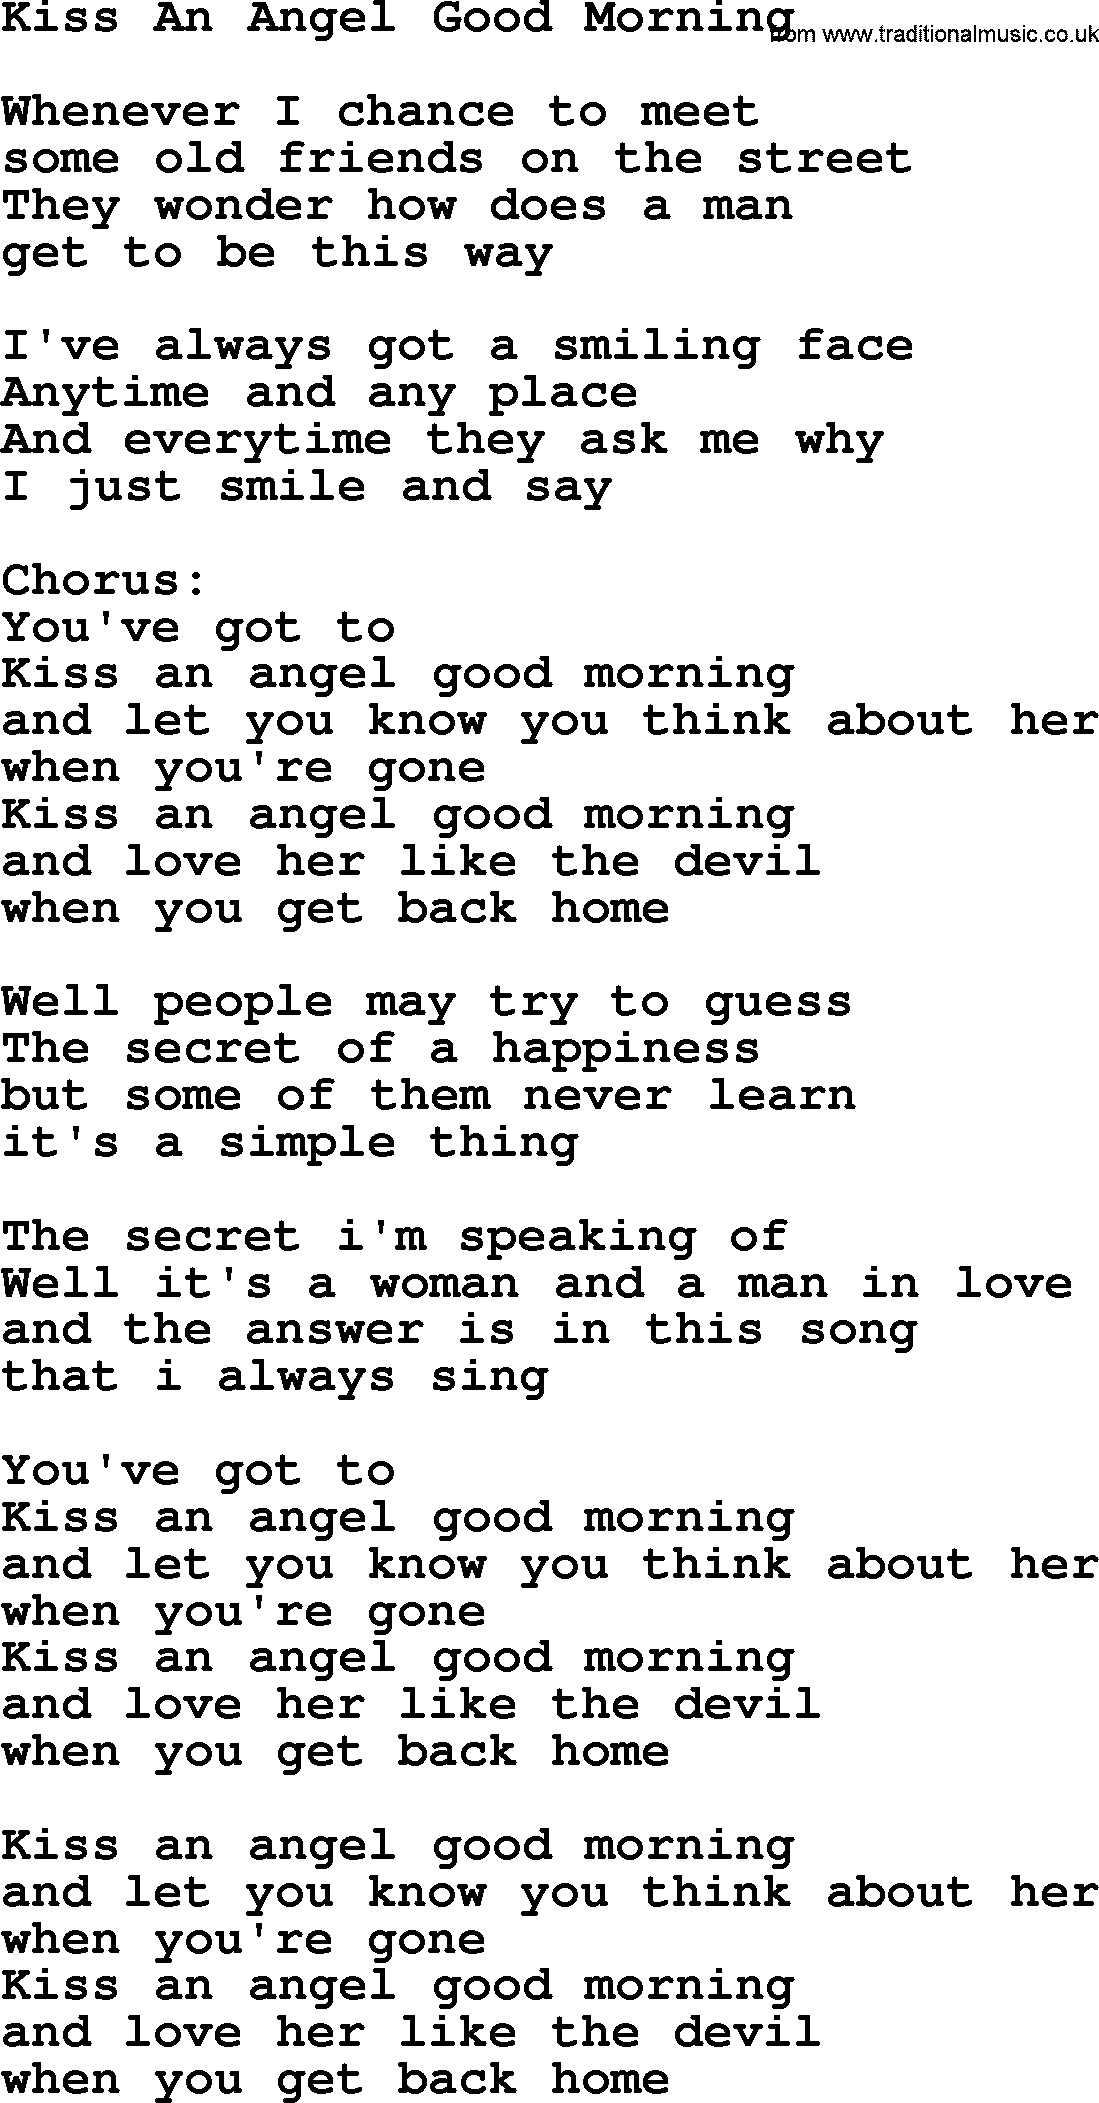 George Jones song: Kiss An Angel Good Morning, lyrics